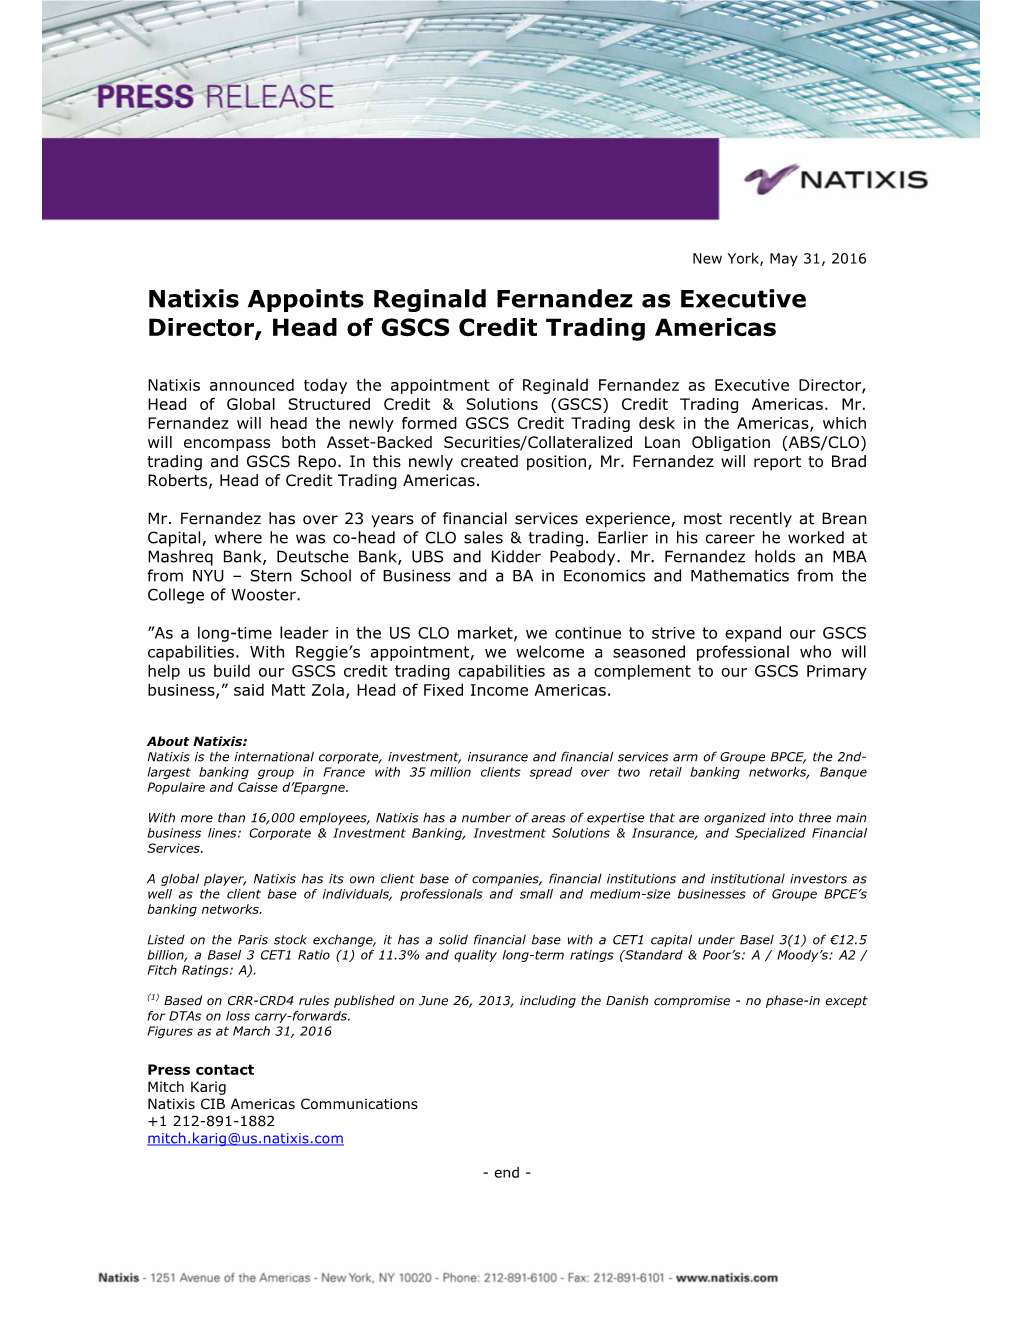 Natixis Appoints Reginald Fernandez As Executive Director, Head of GSCS Credit Trading Americas